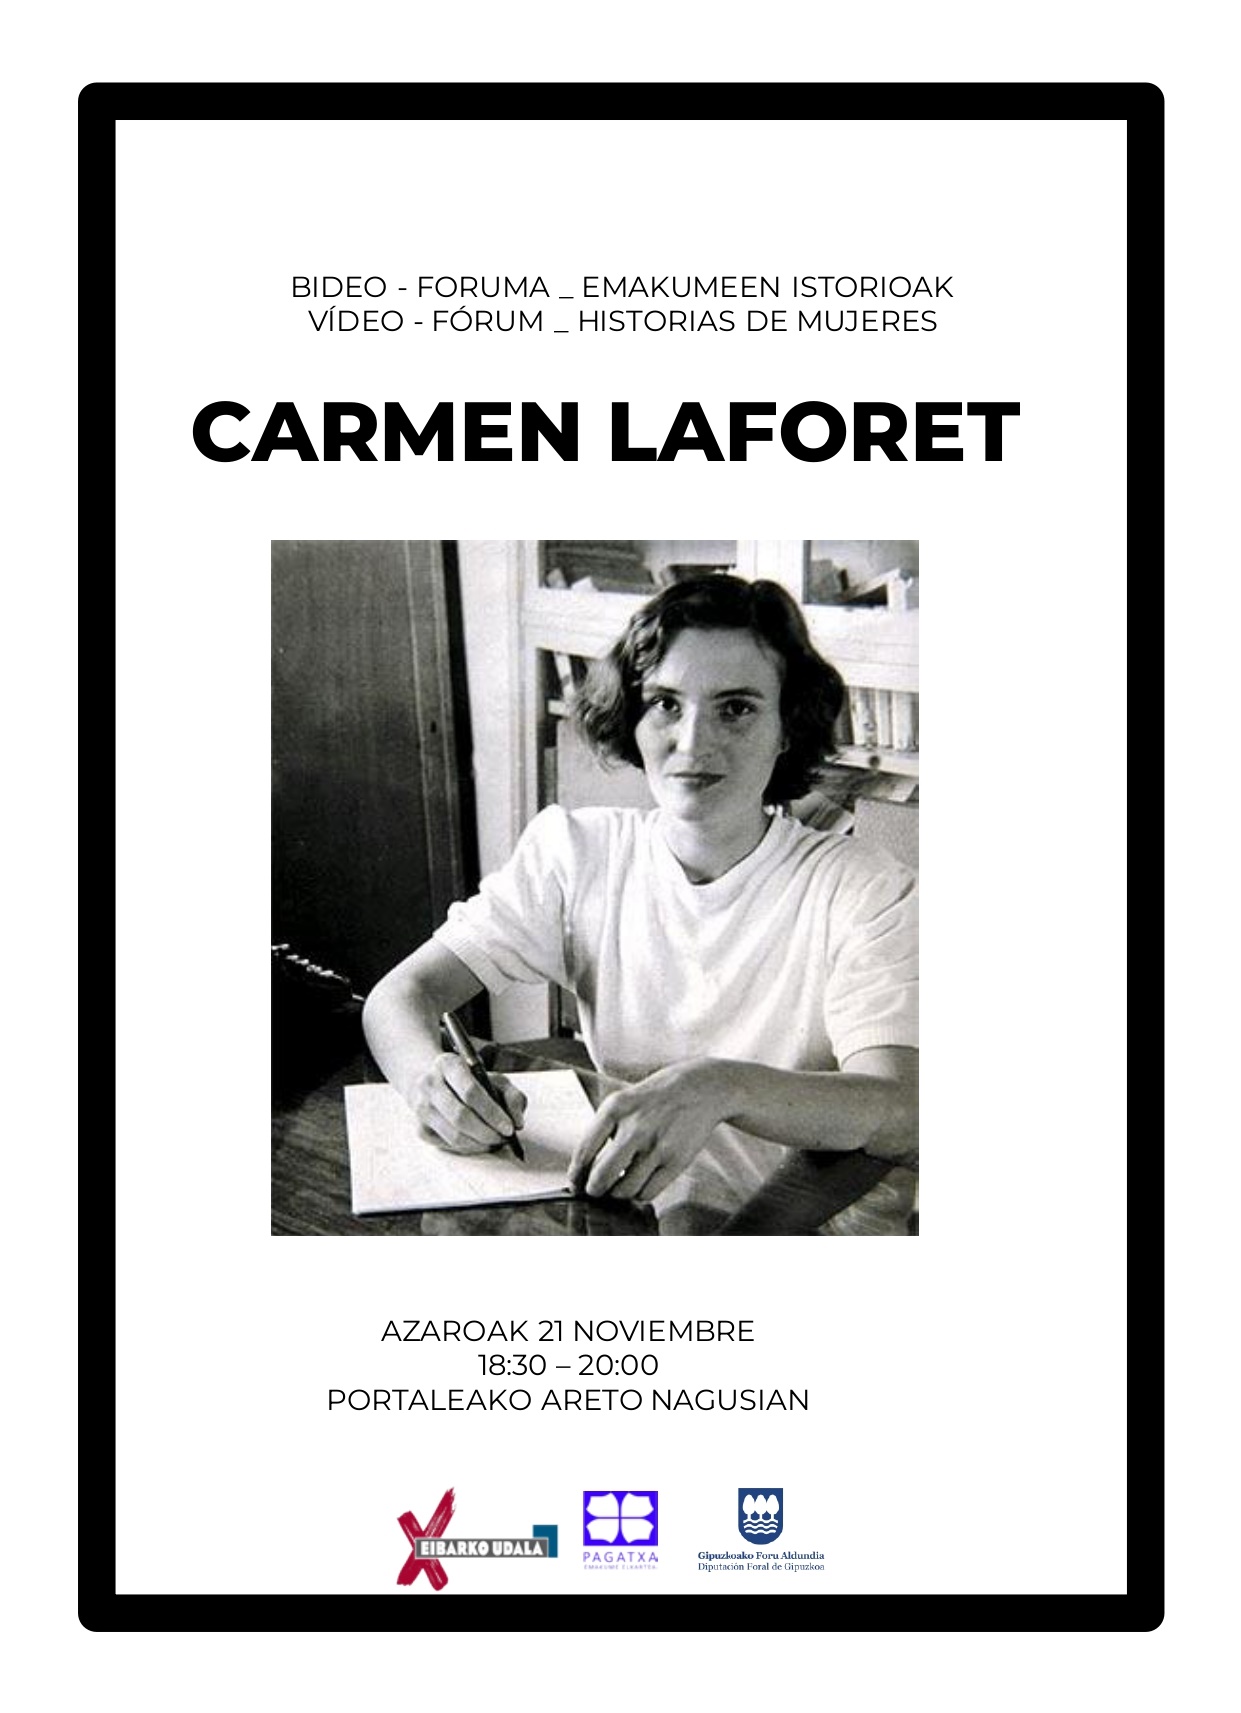 Video Forum de historias de mujeres: Carmen Laforet